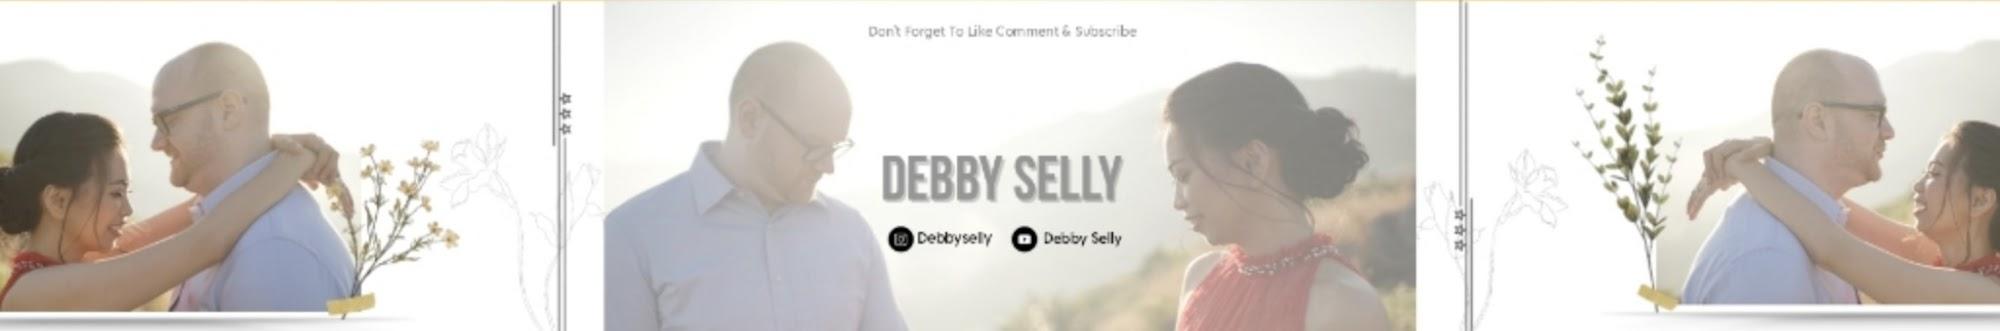 Debby Selly